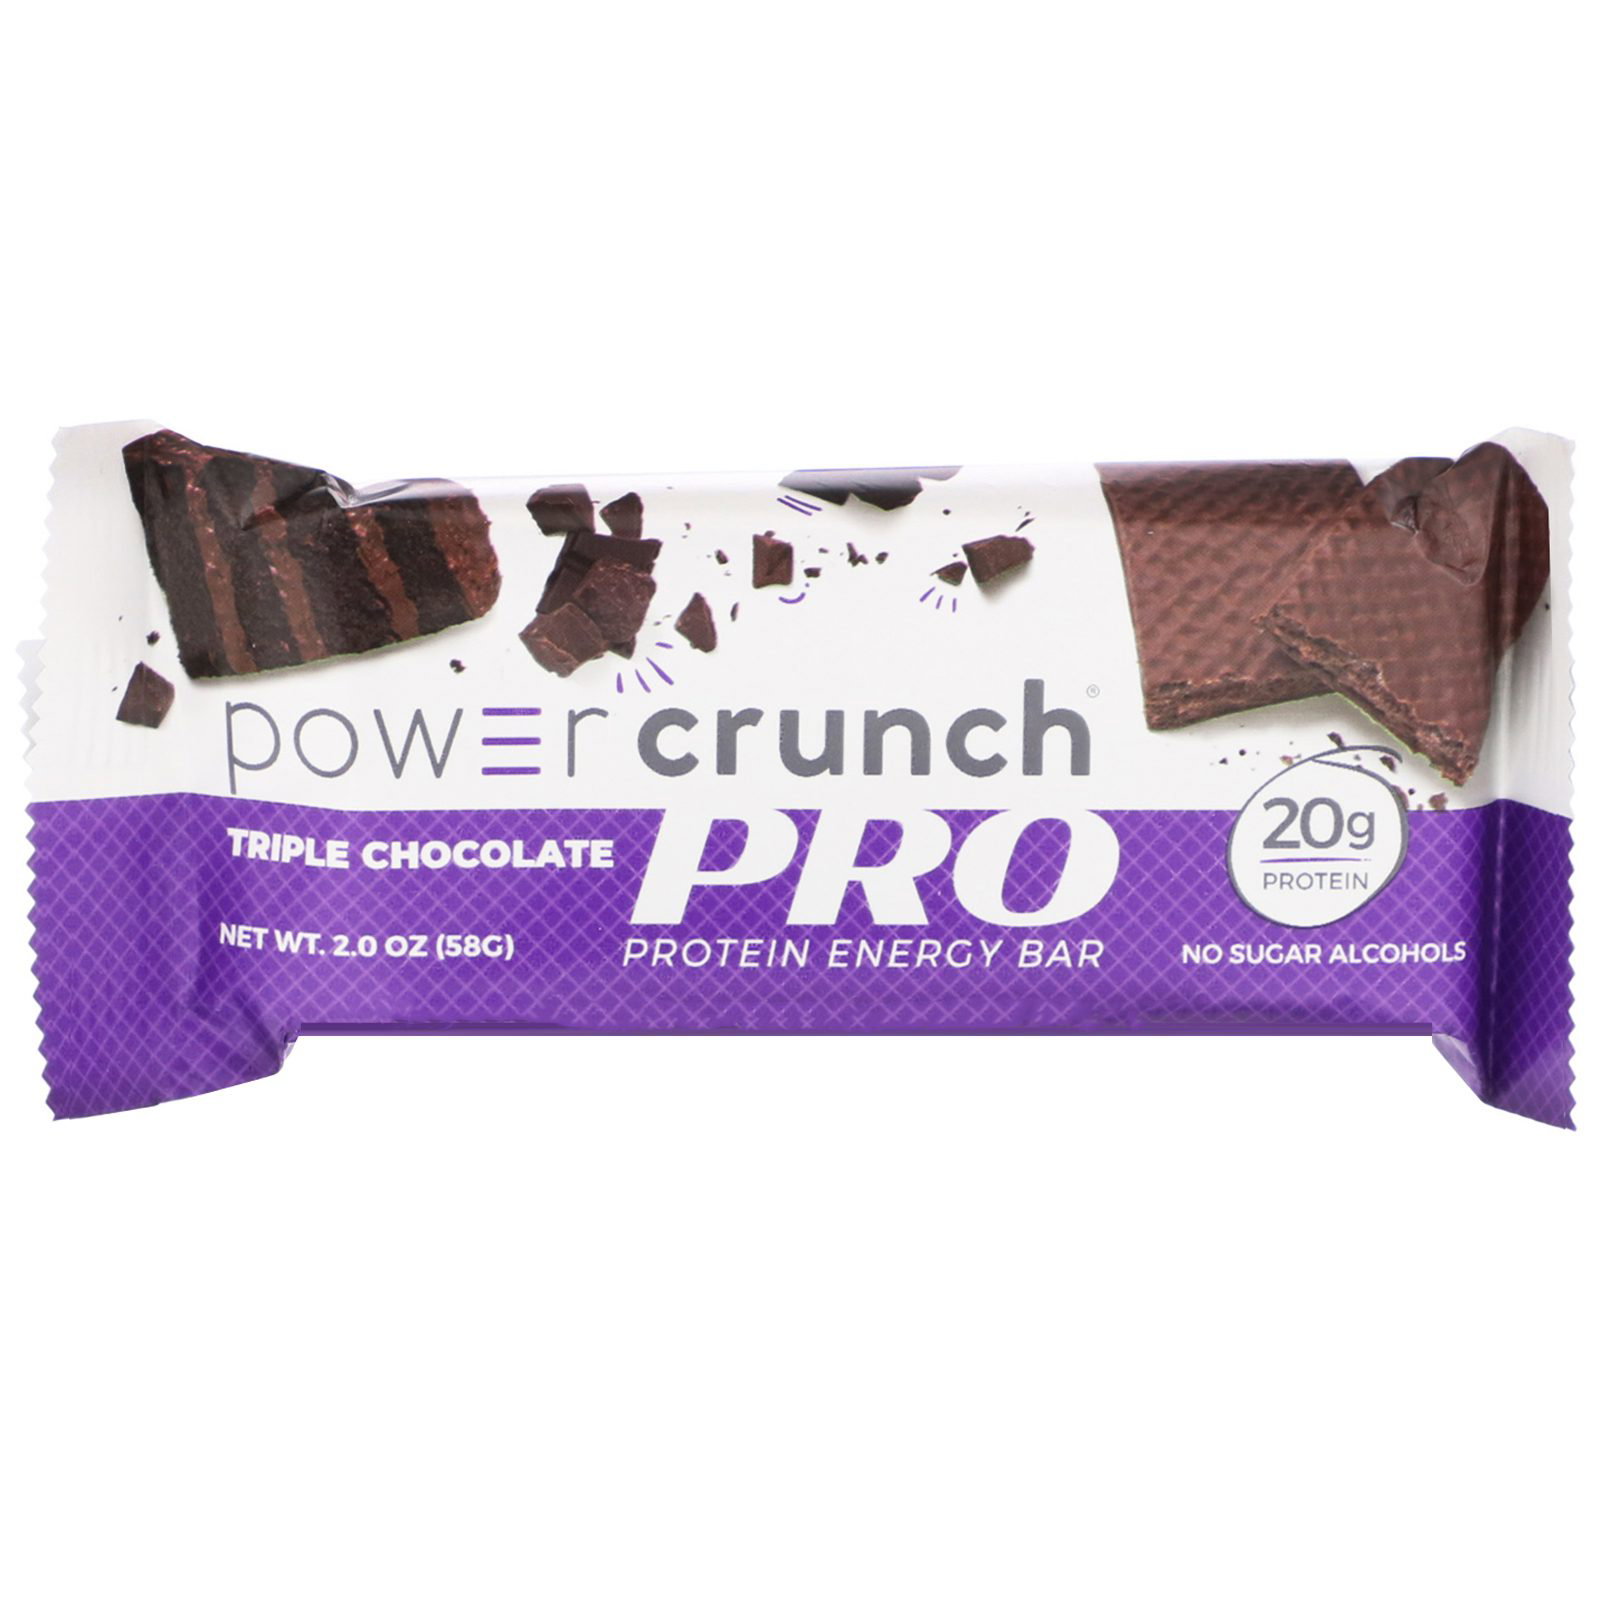 BNRG Power Crunch Protein Energy Bar PRO Triple Chocolate 12 Bars